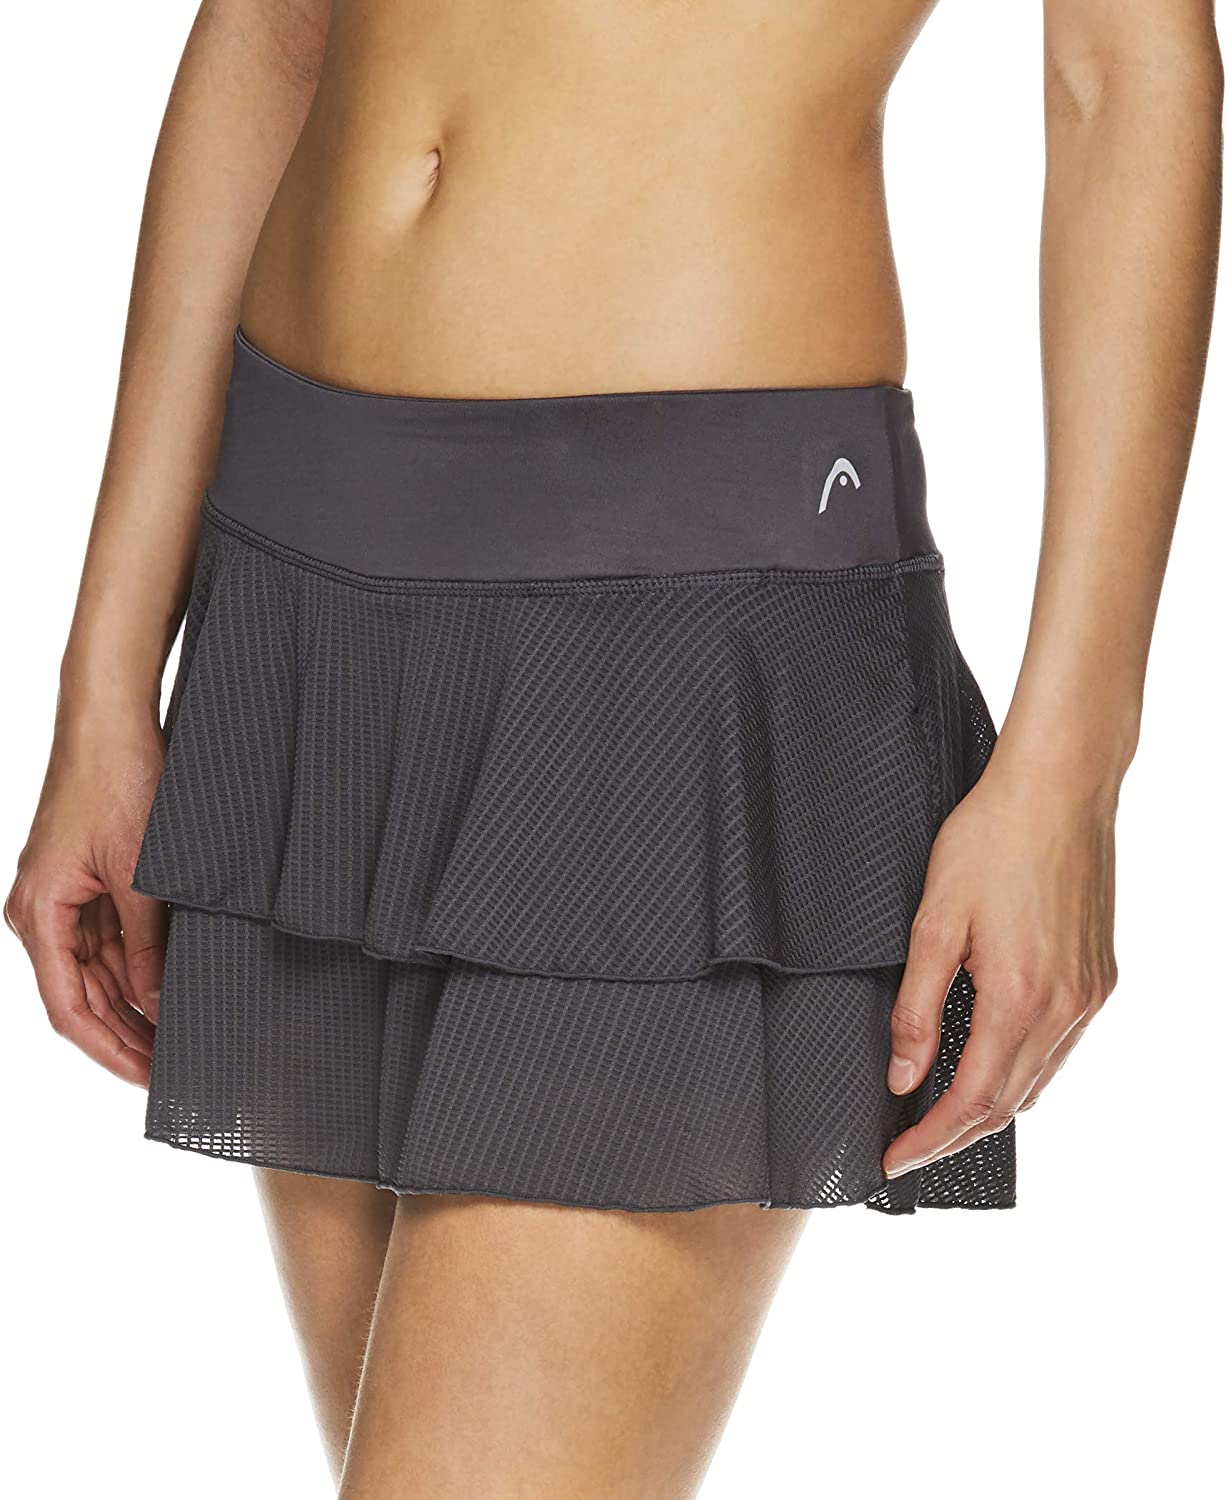 HEAD Womens Athletic Tennis Skort Medium Pleated Quietshade Heather Grey Performance Training & Running Skirt